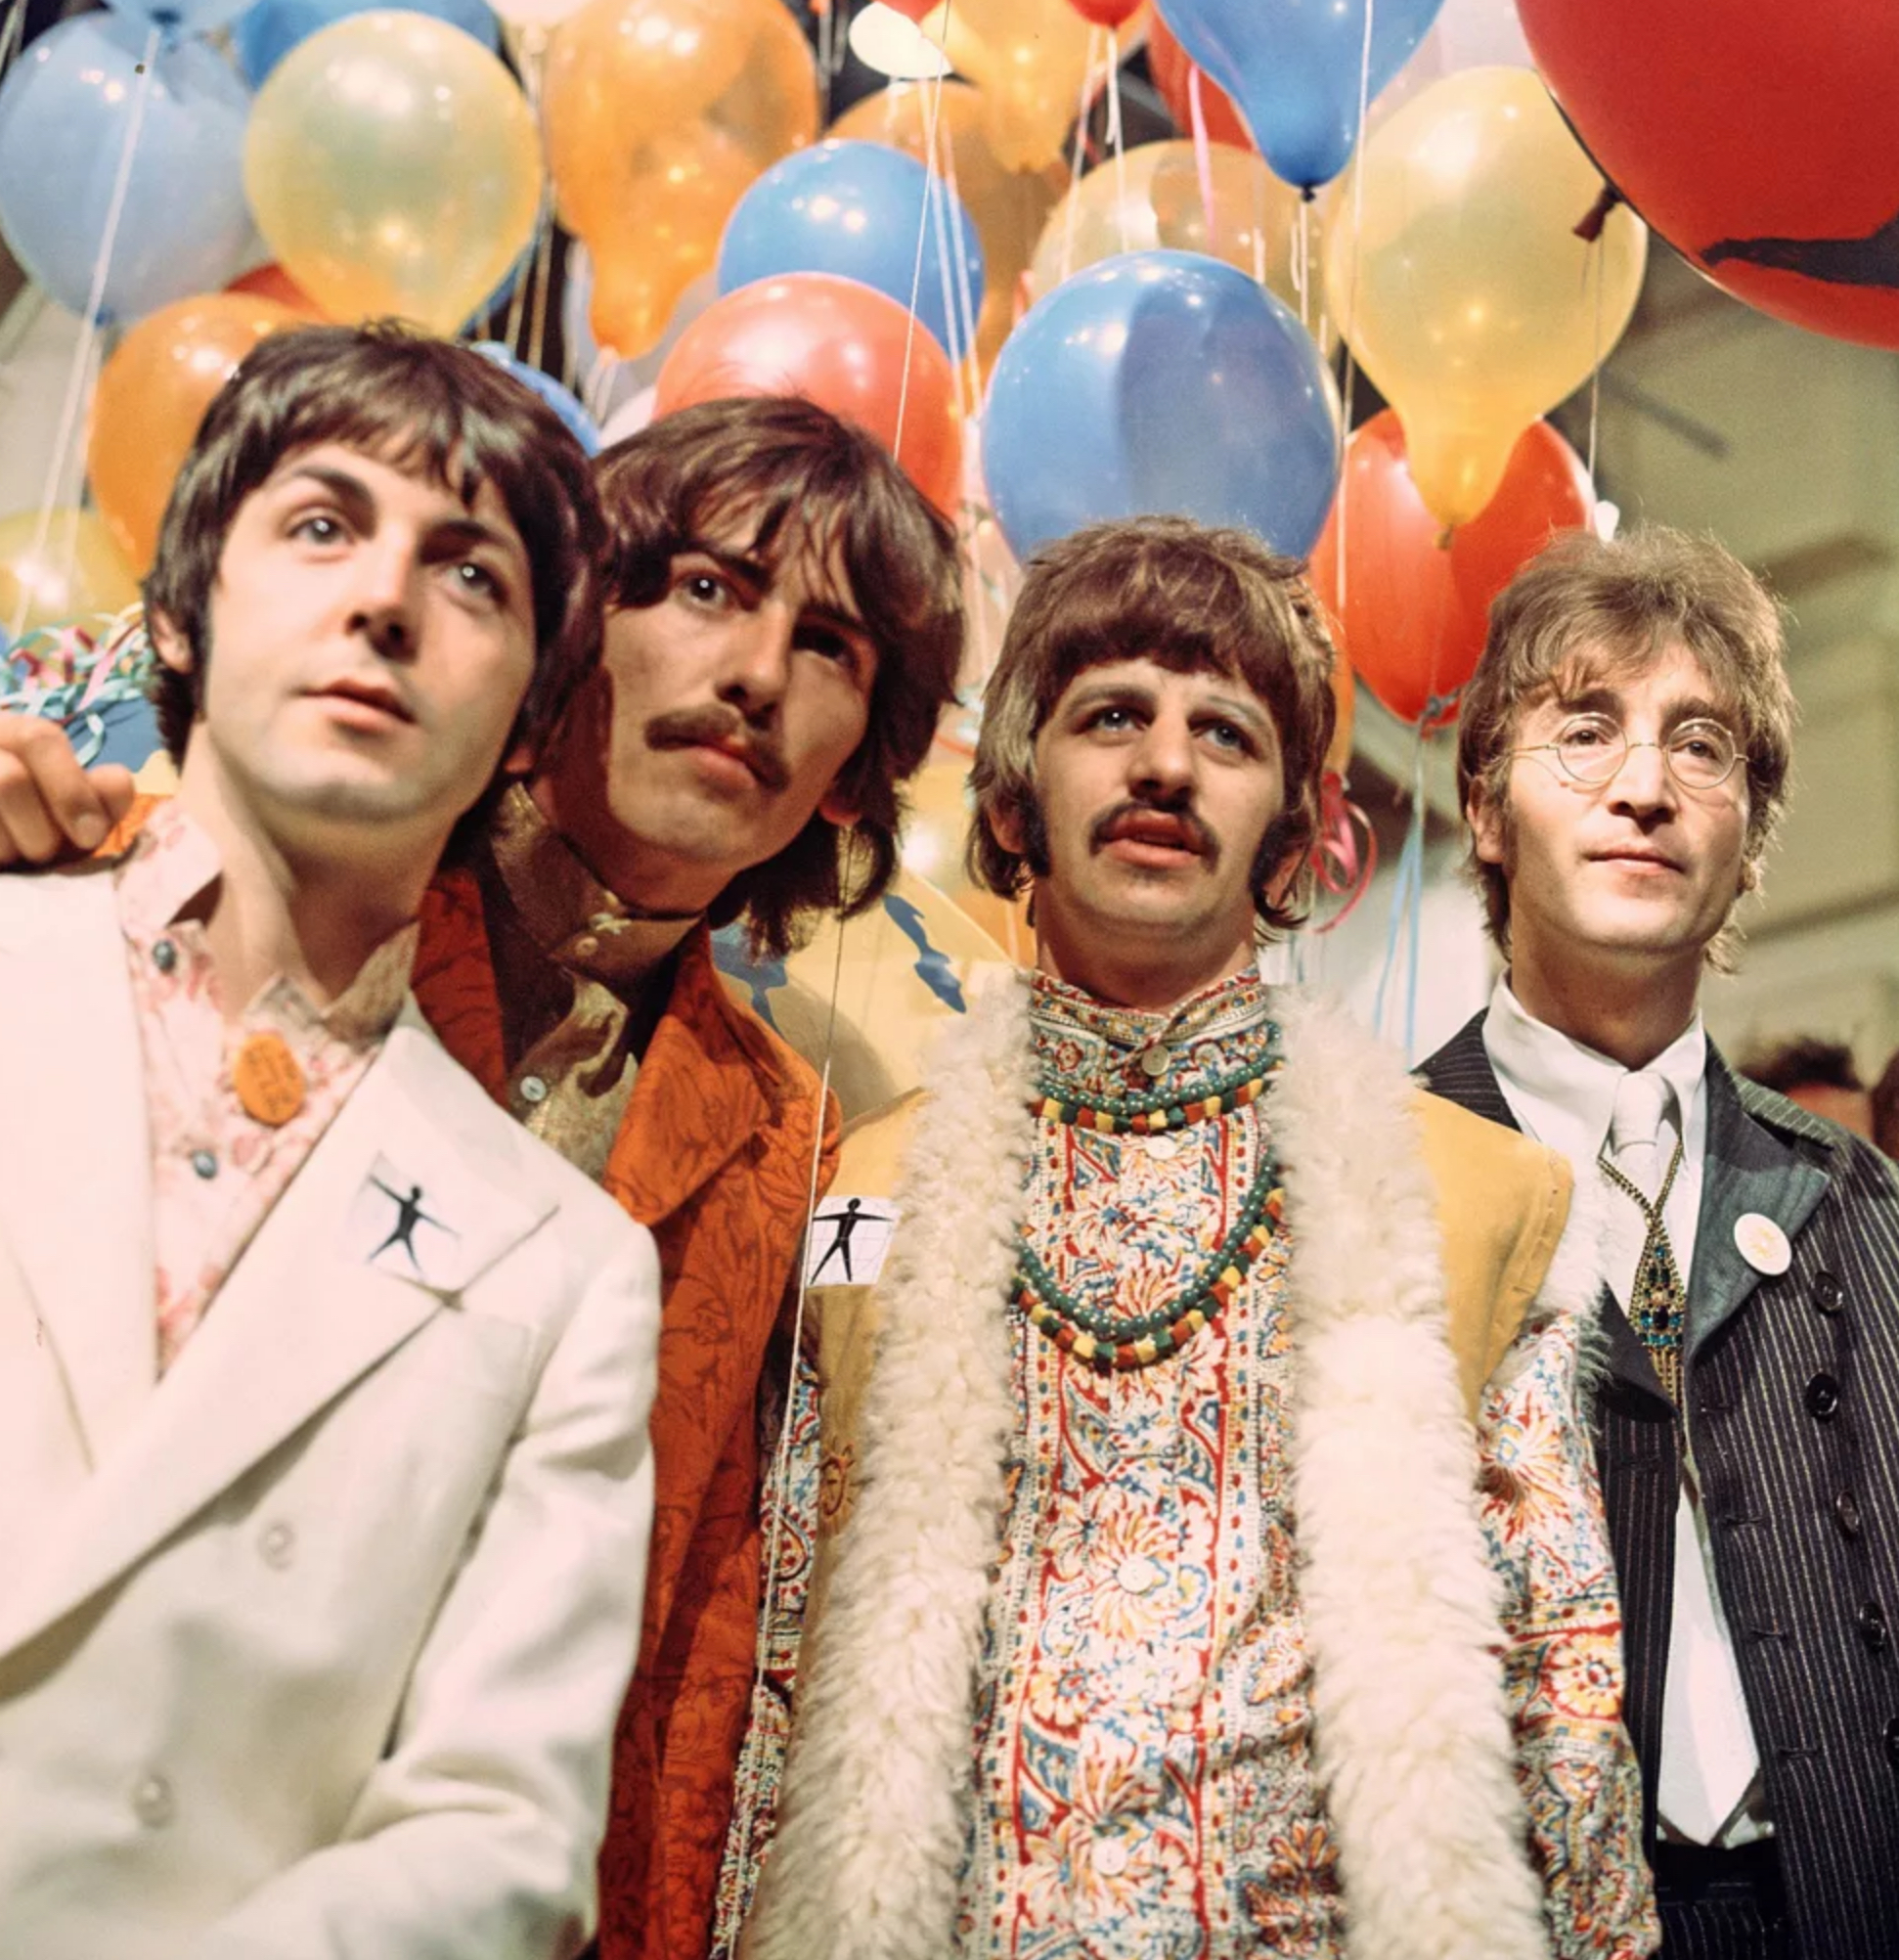 Старые известные группы. The Beatles 1967. Ливерпульская четверка Битлз. Группа the Beatles 60х. Битлз хиппи.